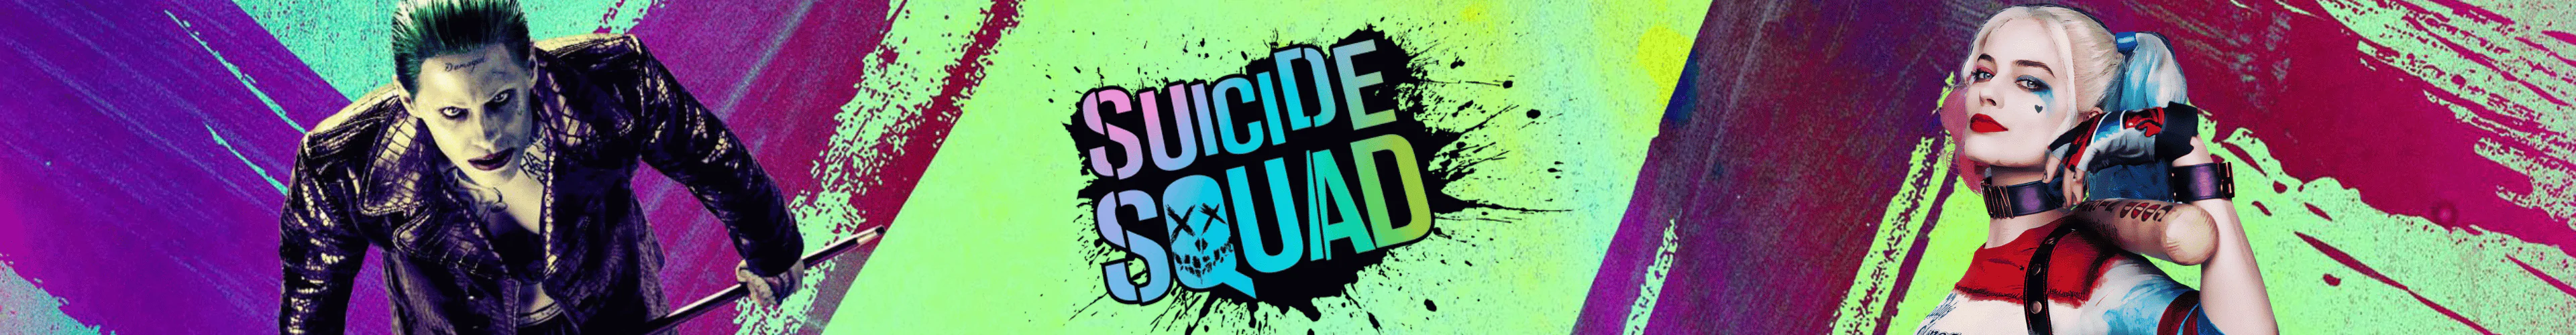 Suicide Squad Produkte banner